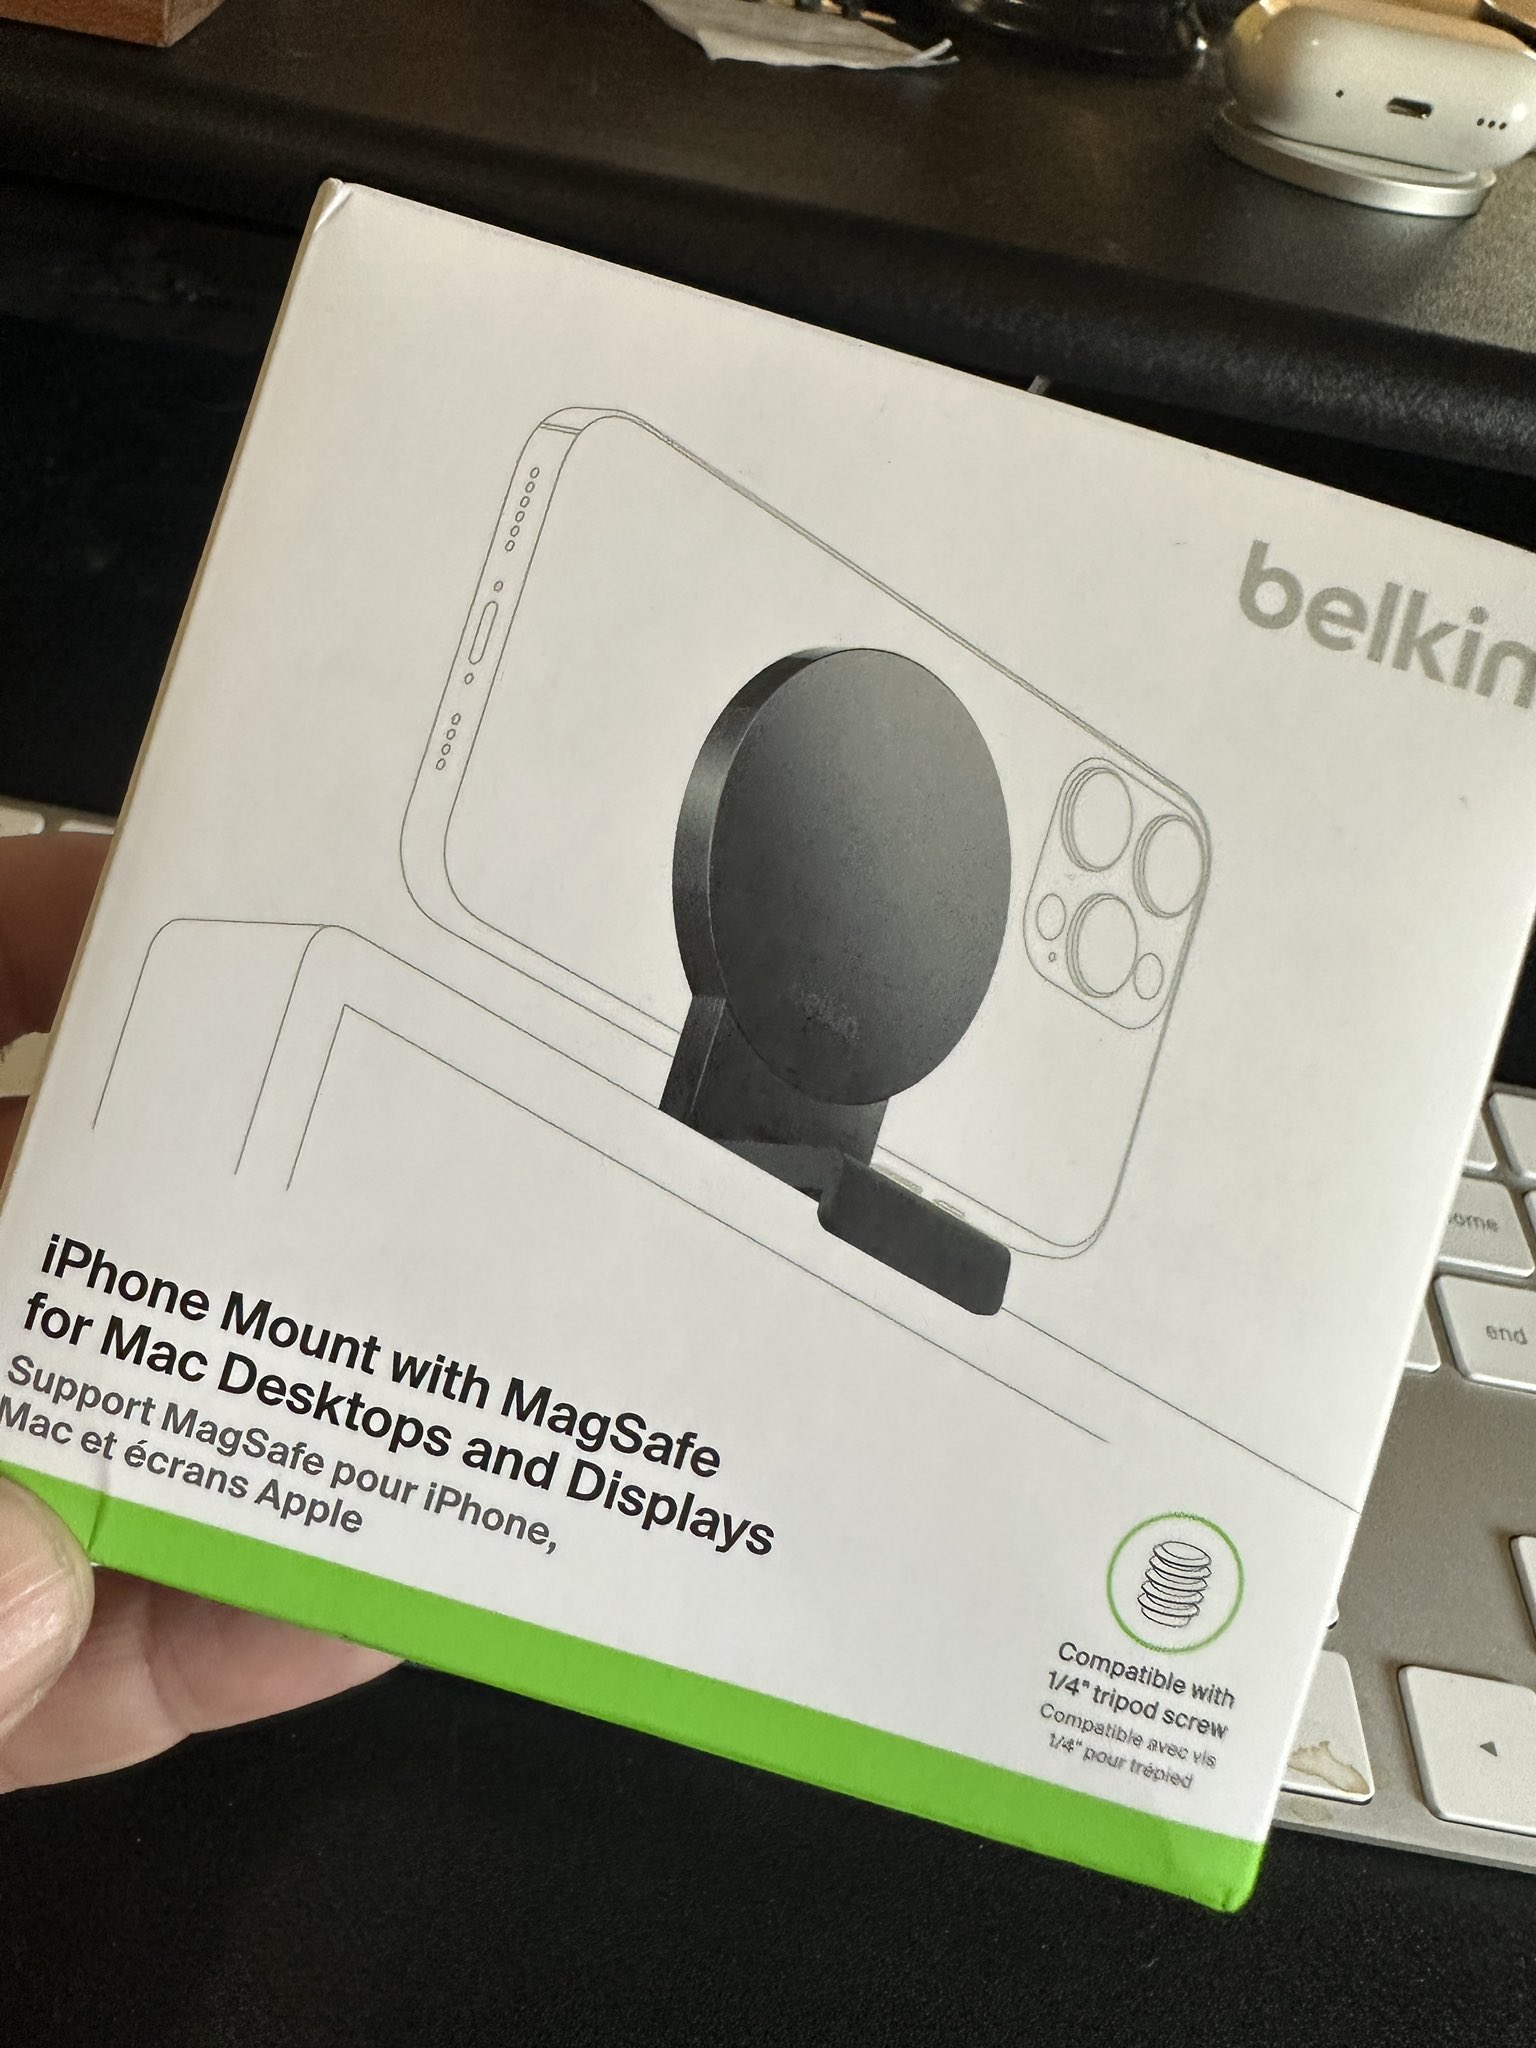 Support d'iPhone Belkin avec MagSafe pour Mac - Apple (FR)